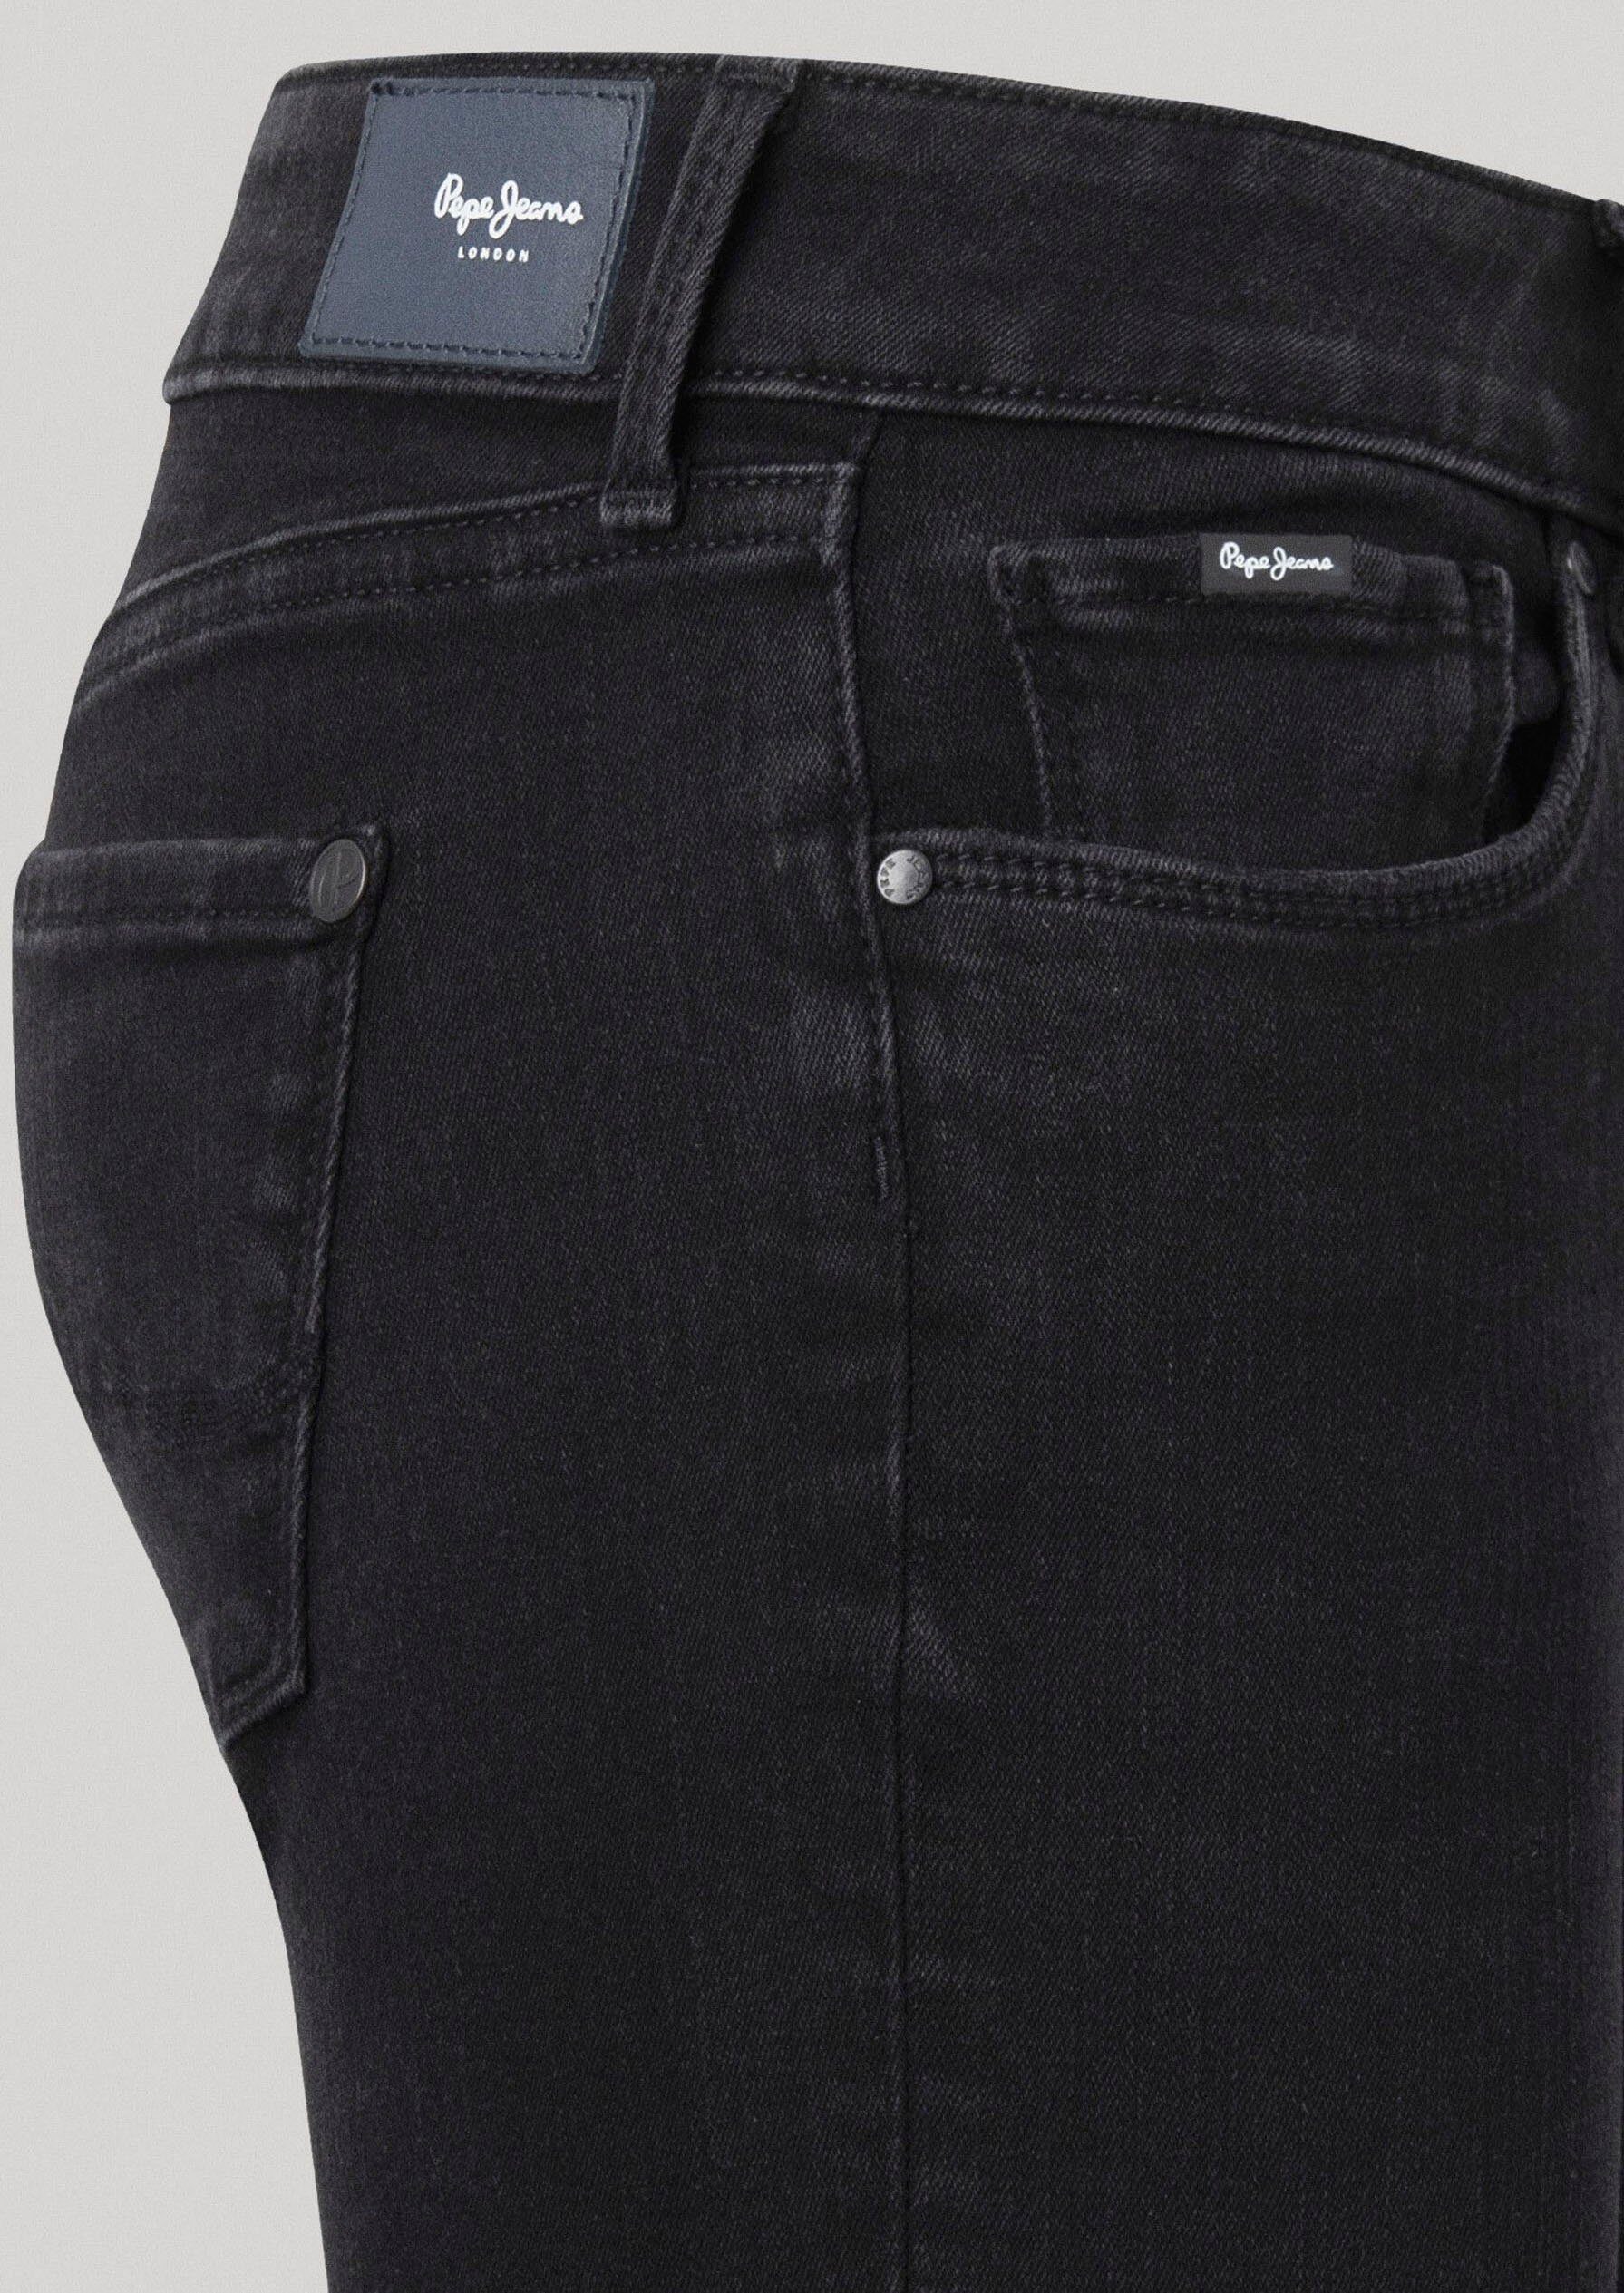 1-Knopf Jeans Bund Stretch-Anteil black mit und Pepe 5-Pocket-Stil im Skinny-fit-Jeans SOHO